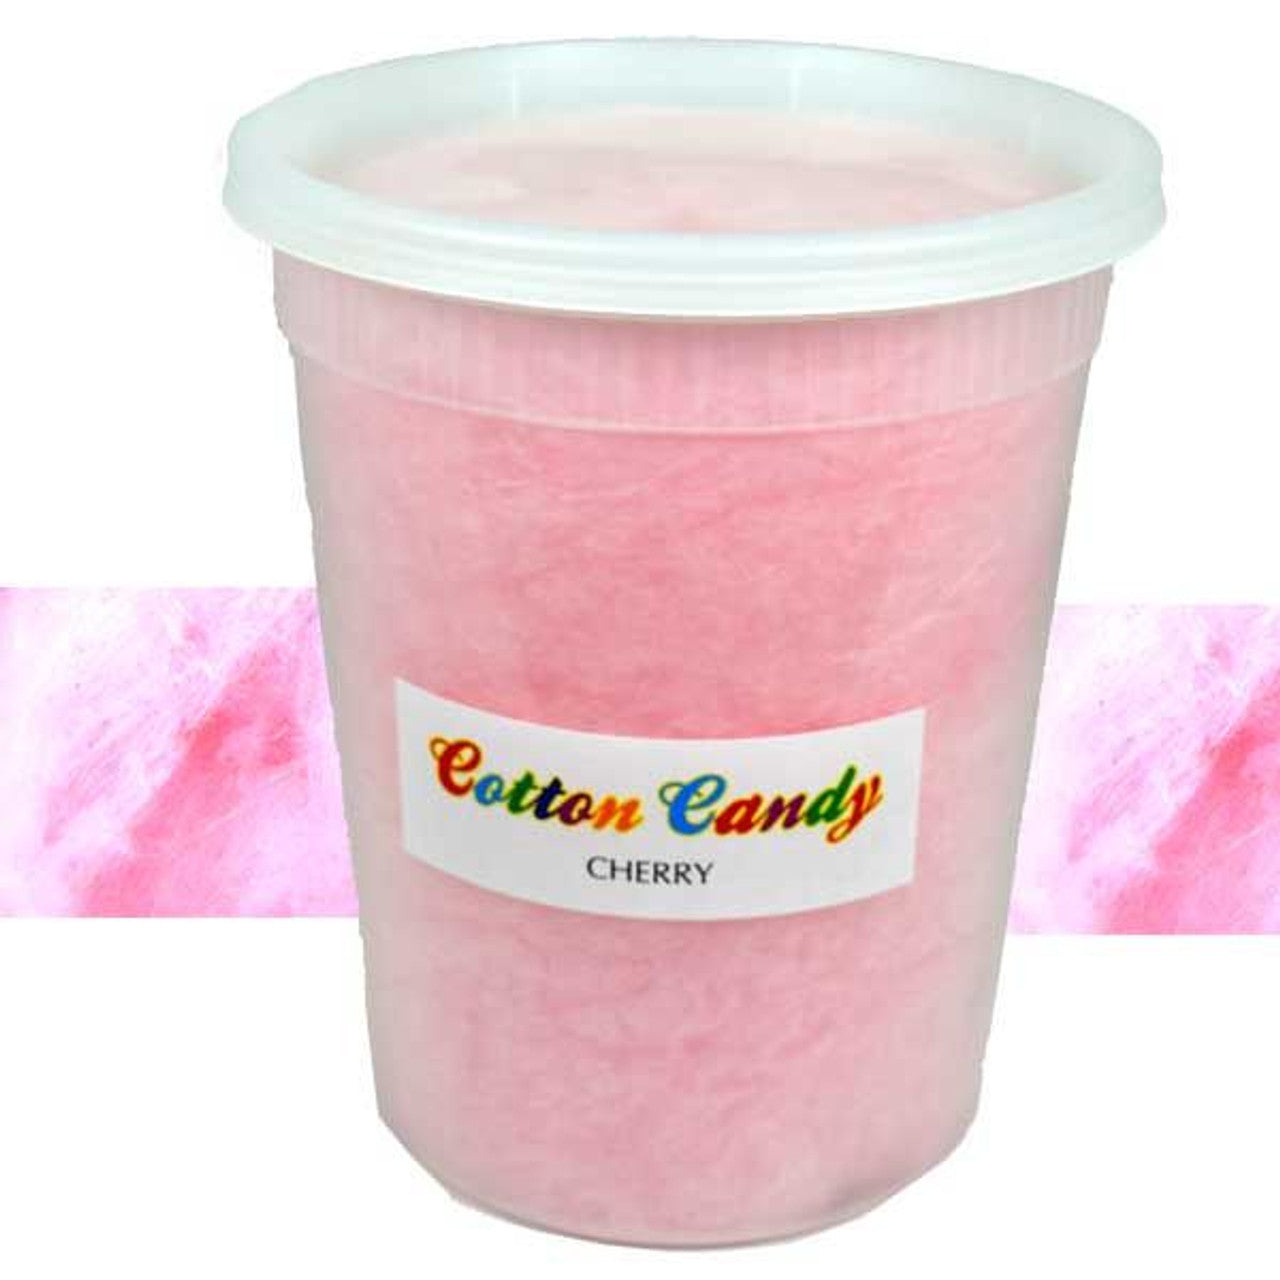 Cotton Candy Cherry